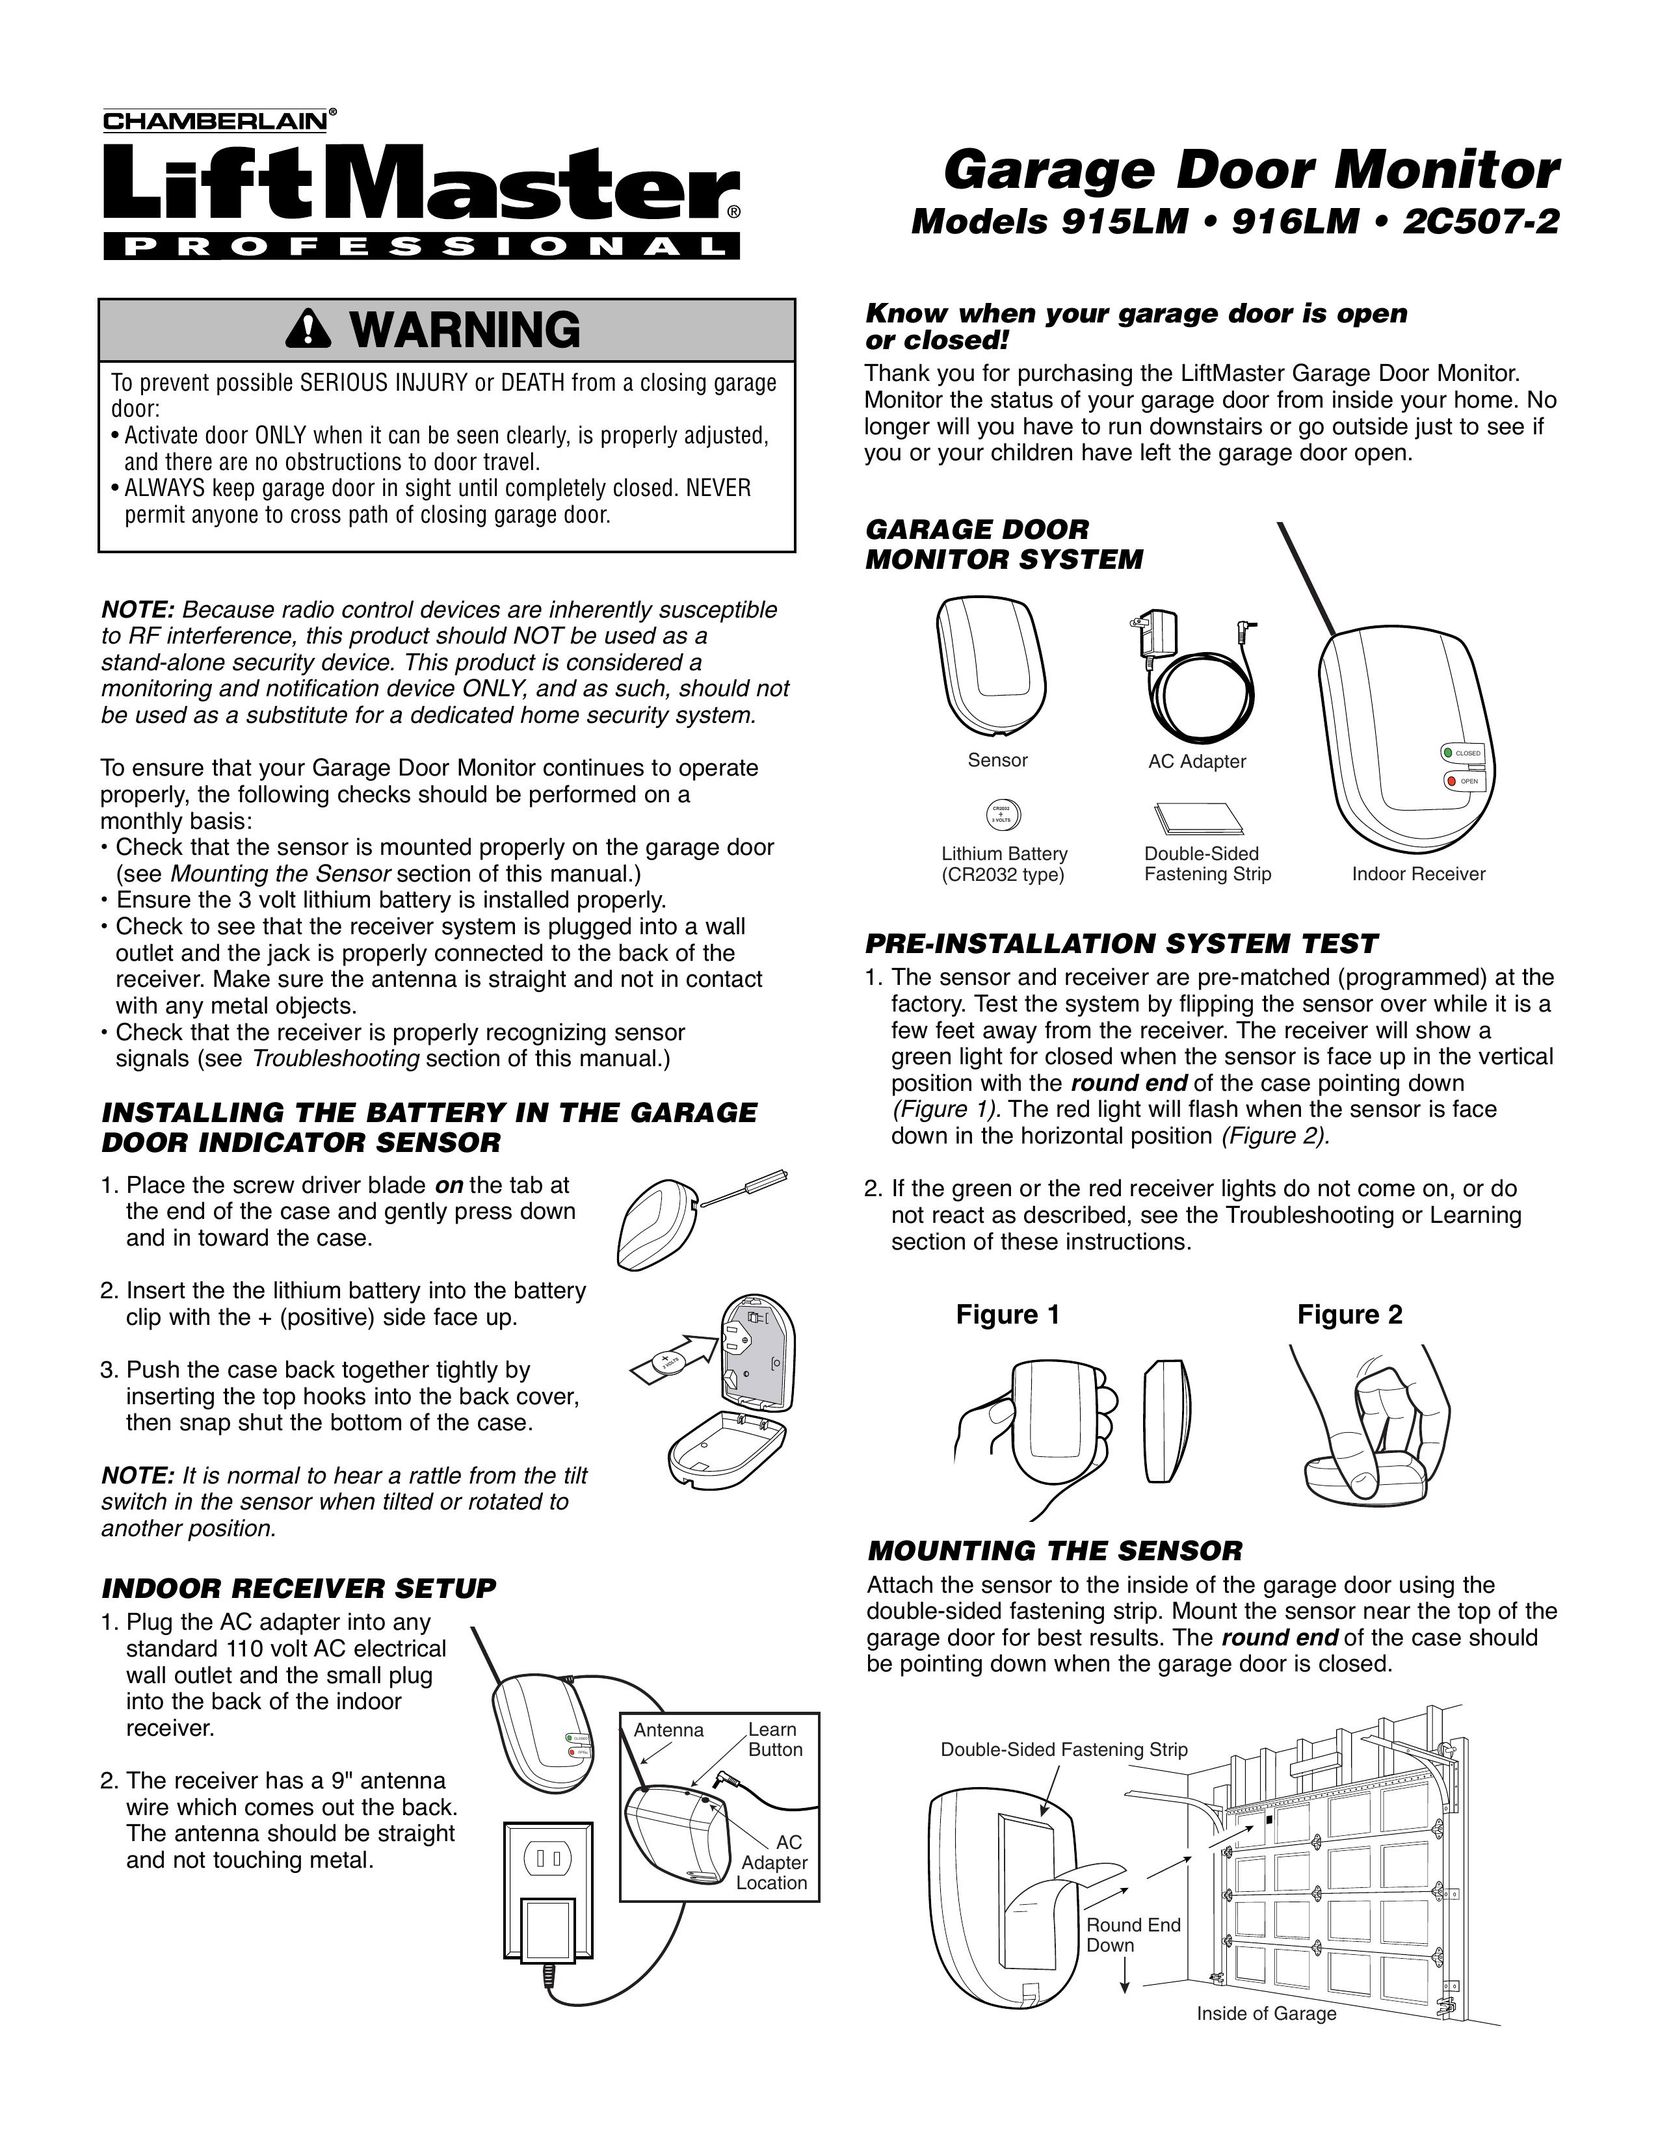 Chamberlain 915LM Computer Monitor User Manual